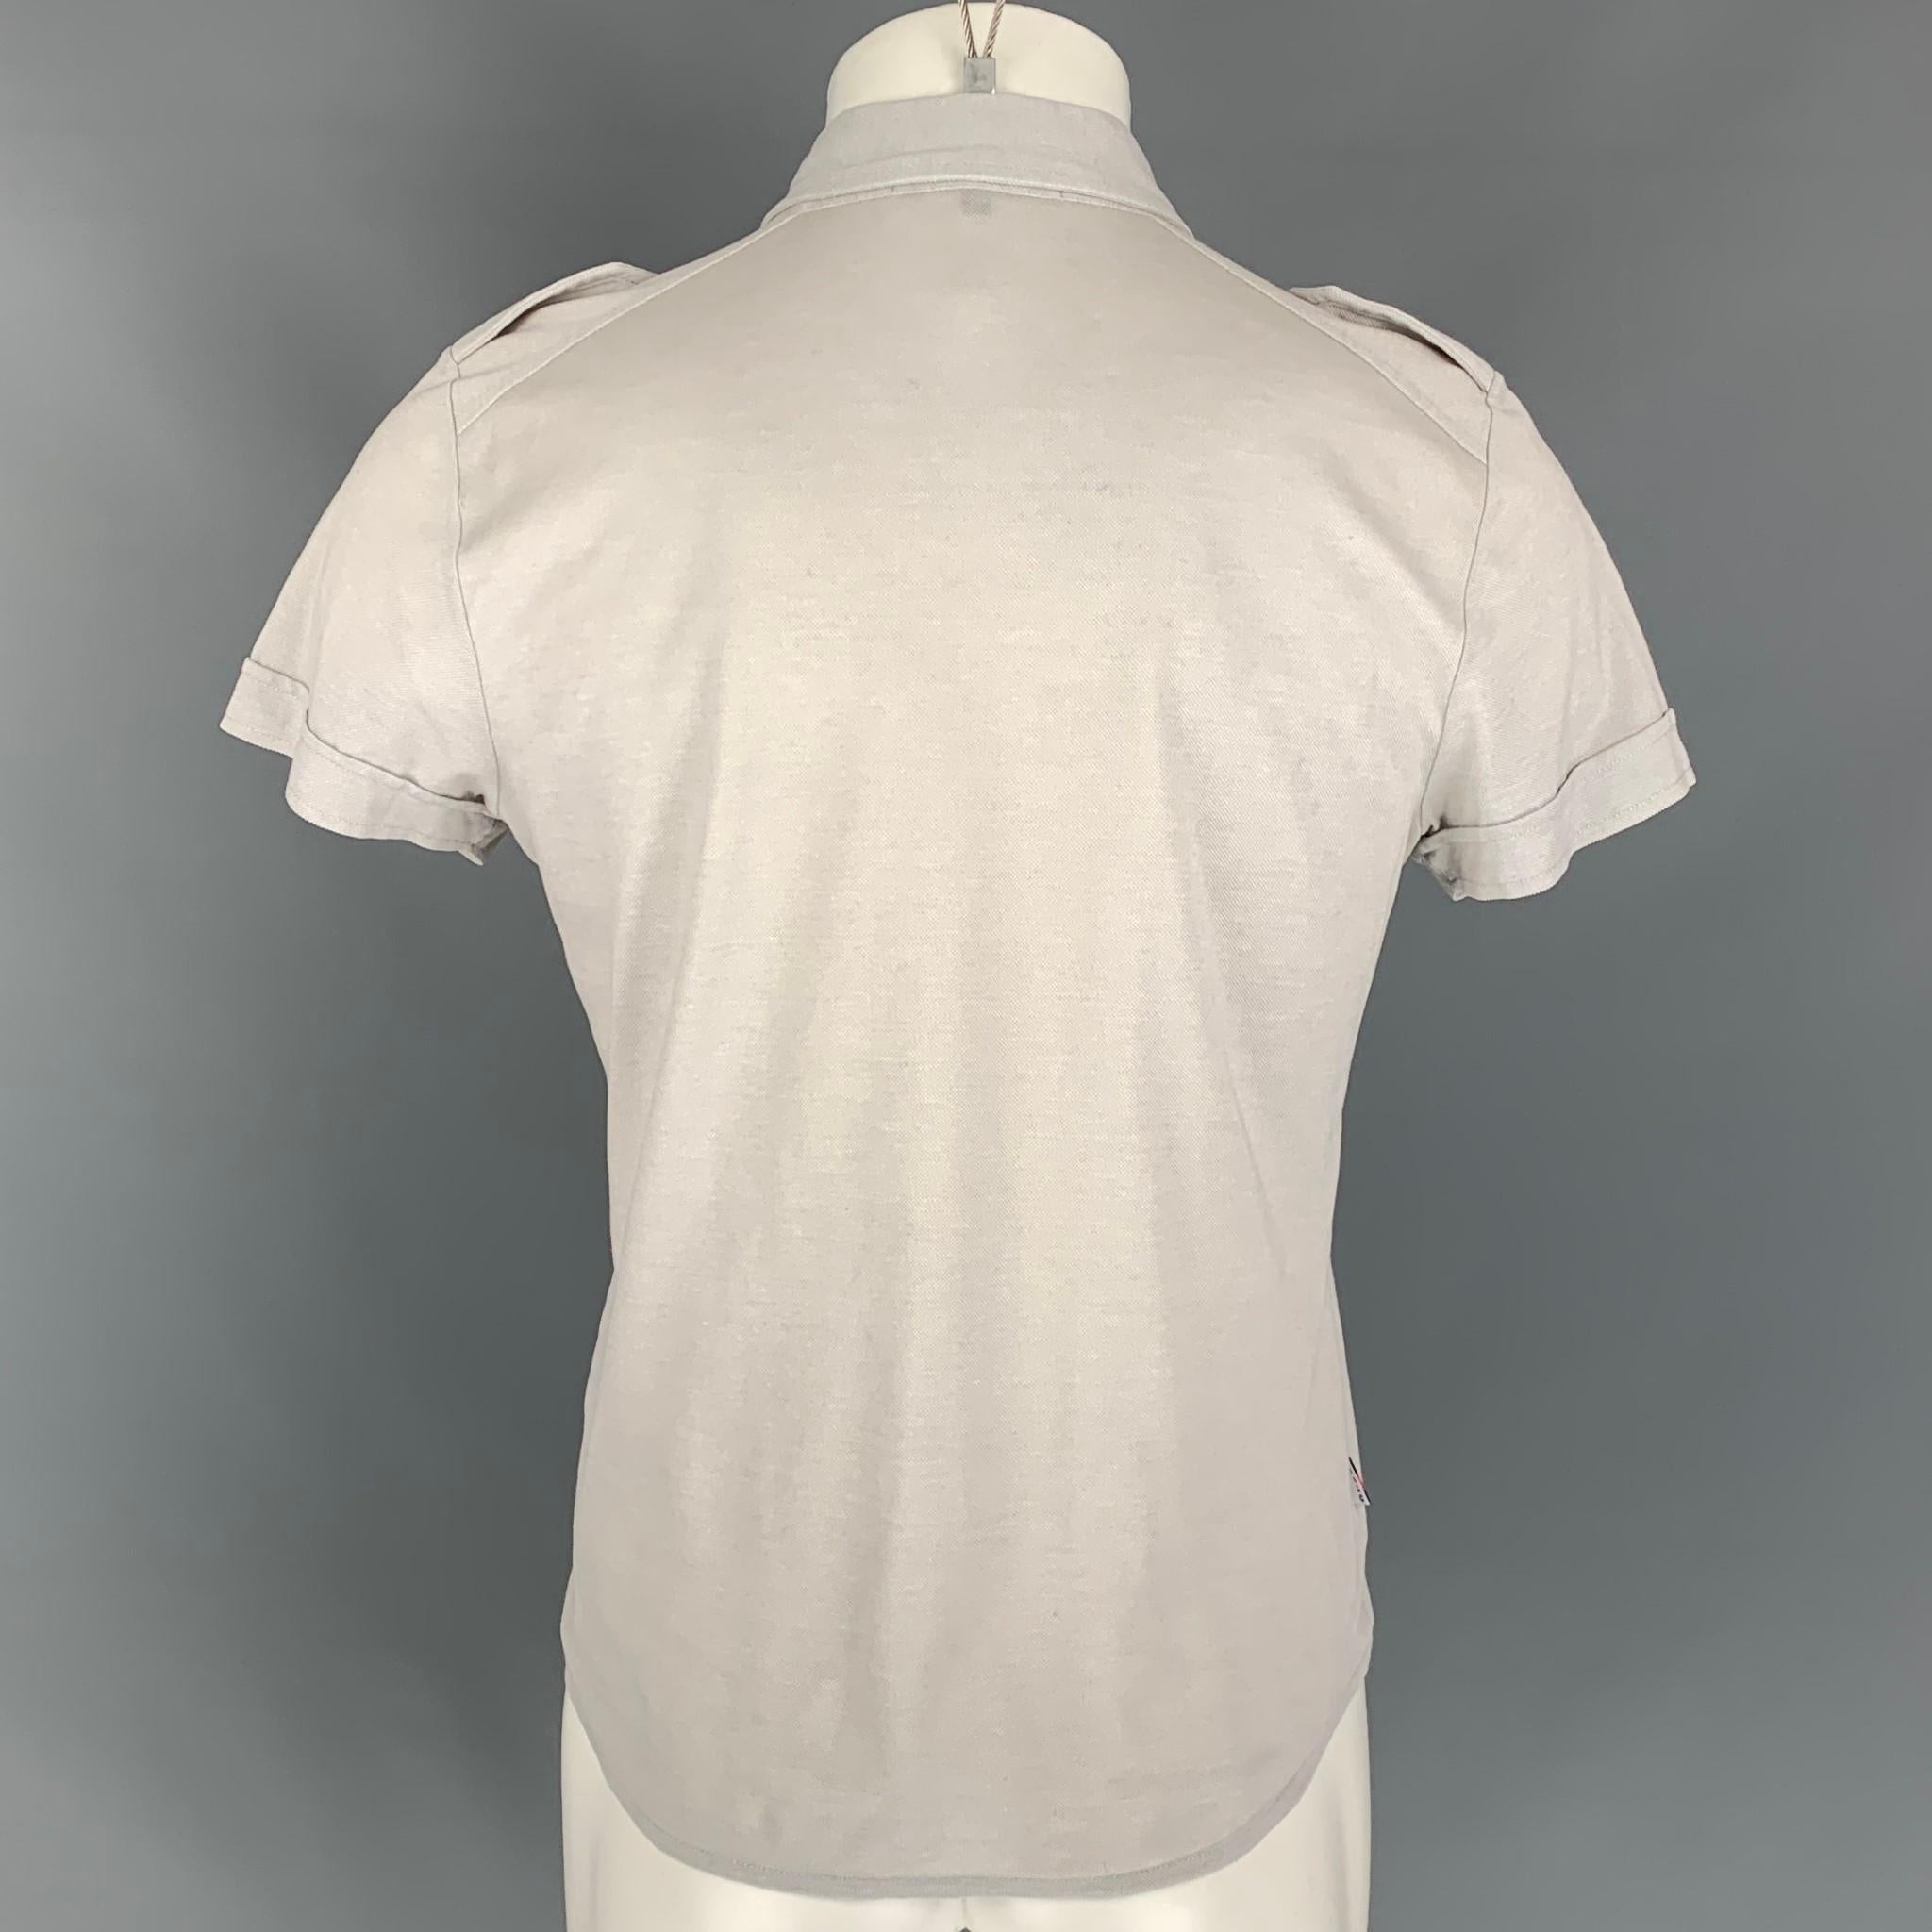 Beige GUCCI Size M Light Grey Textured Cotton Button Down Short Sleeve Shirt